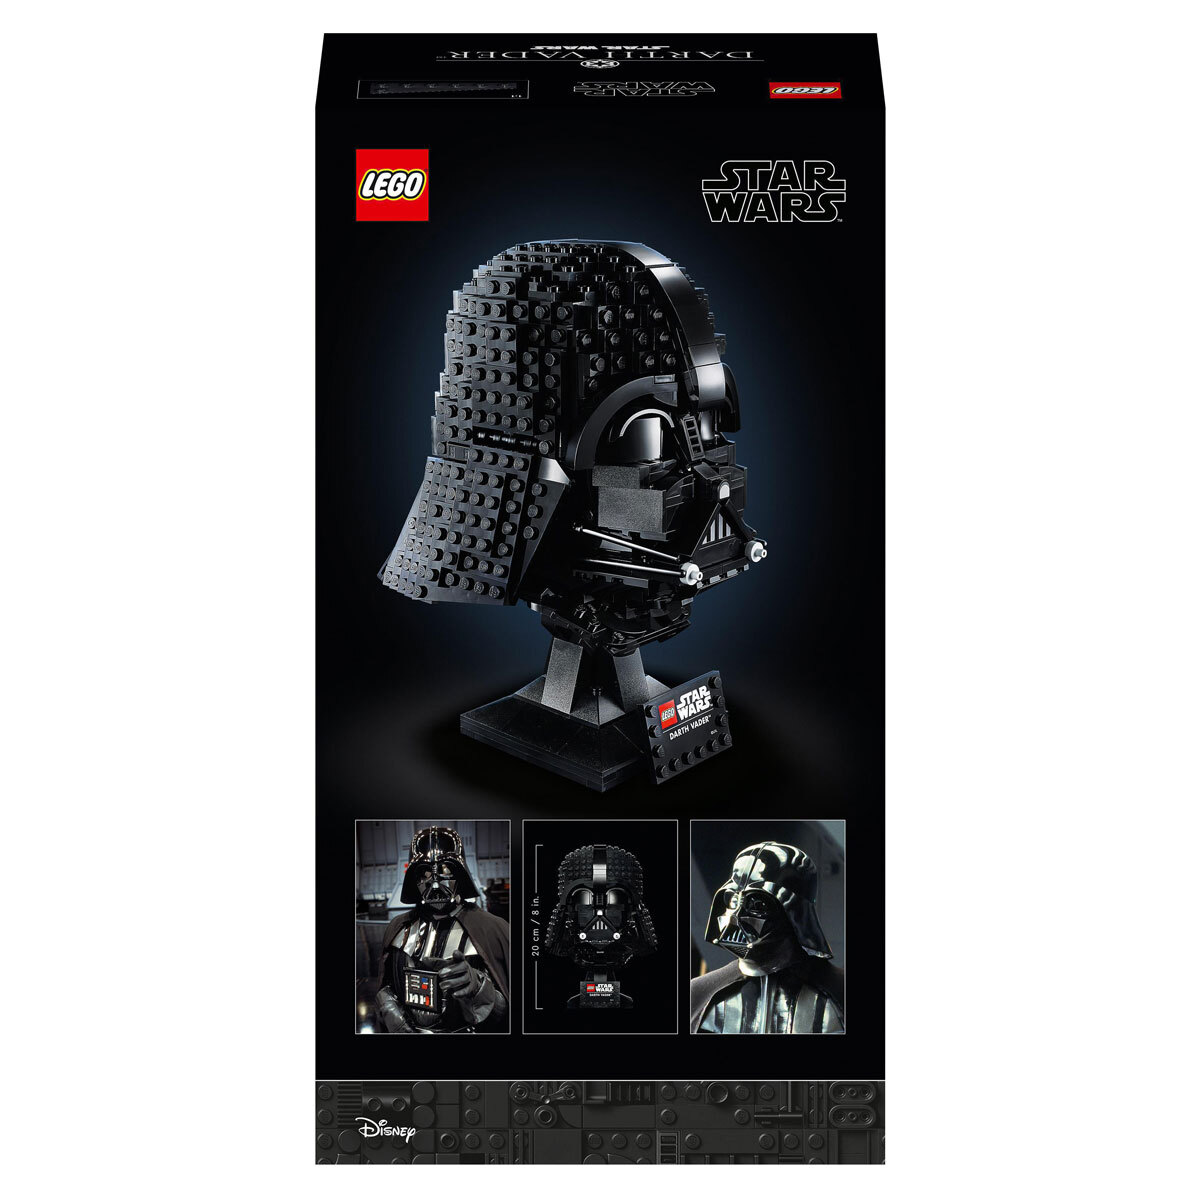 Buy LEGO Darth Vader Helmet Model 75304 Back of Box Image at Costco.co.uk